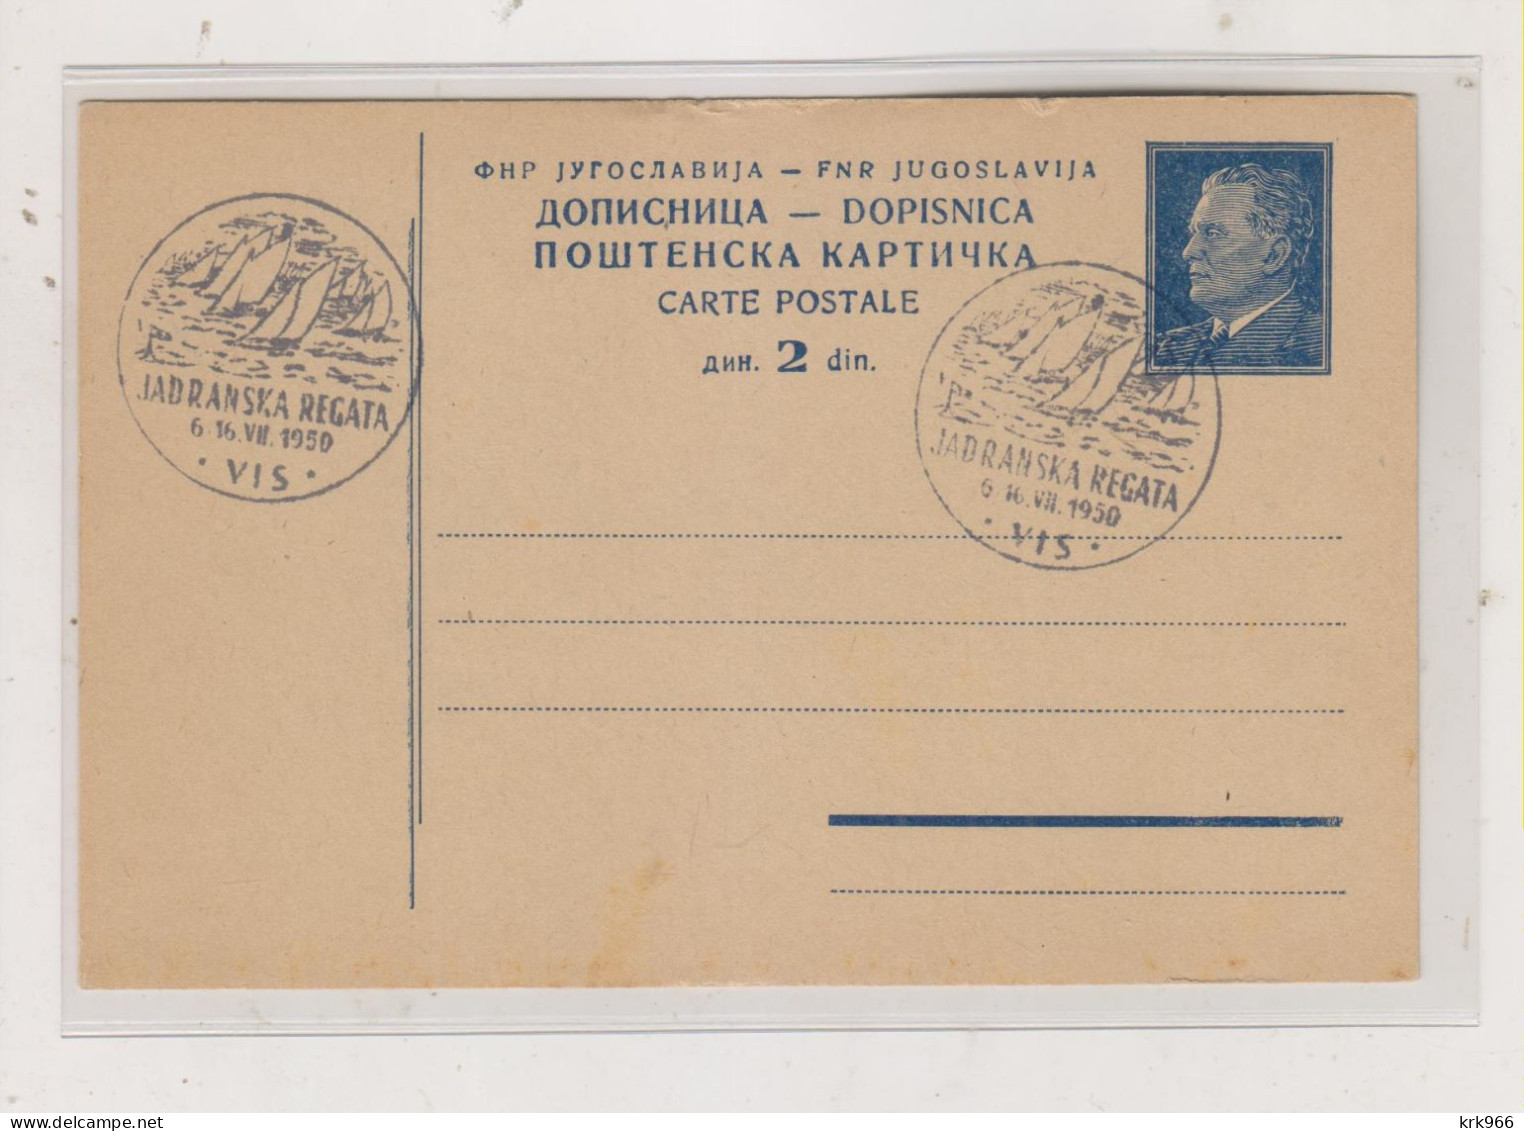 YUGOSLAVIA,1950  VIS Nice Postal Stationery - Covers & Documents